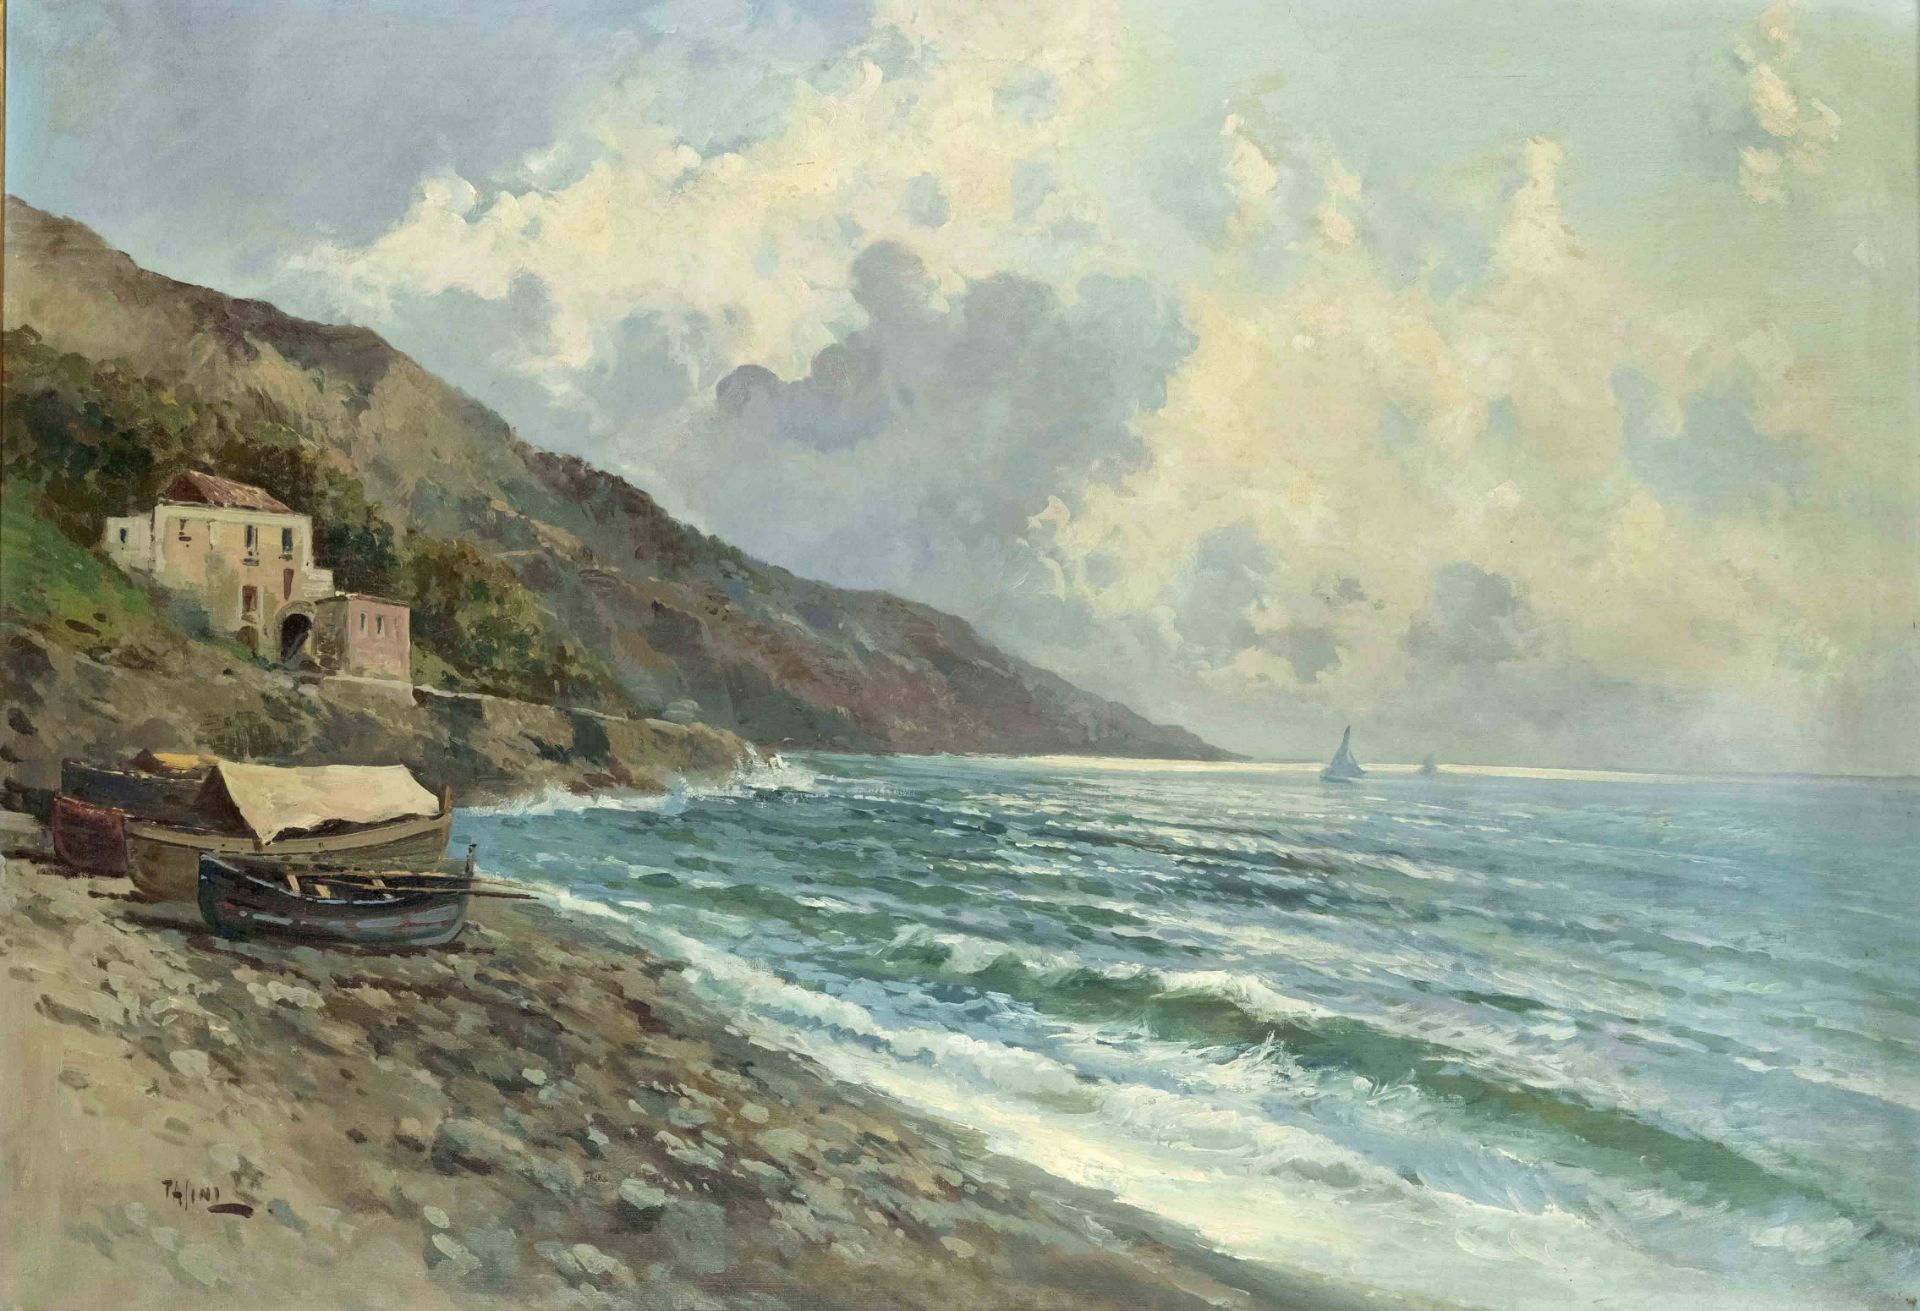 Emilio Pasini (1872-1953), Italian coastal scene with boats, oil on canvas, signed lower left, 70